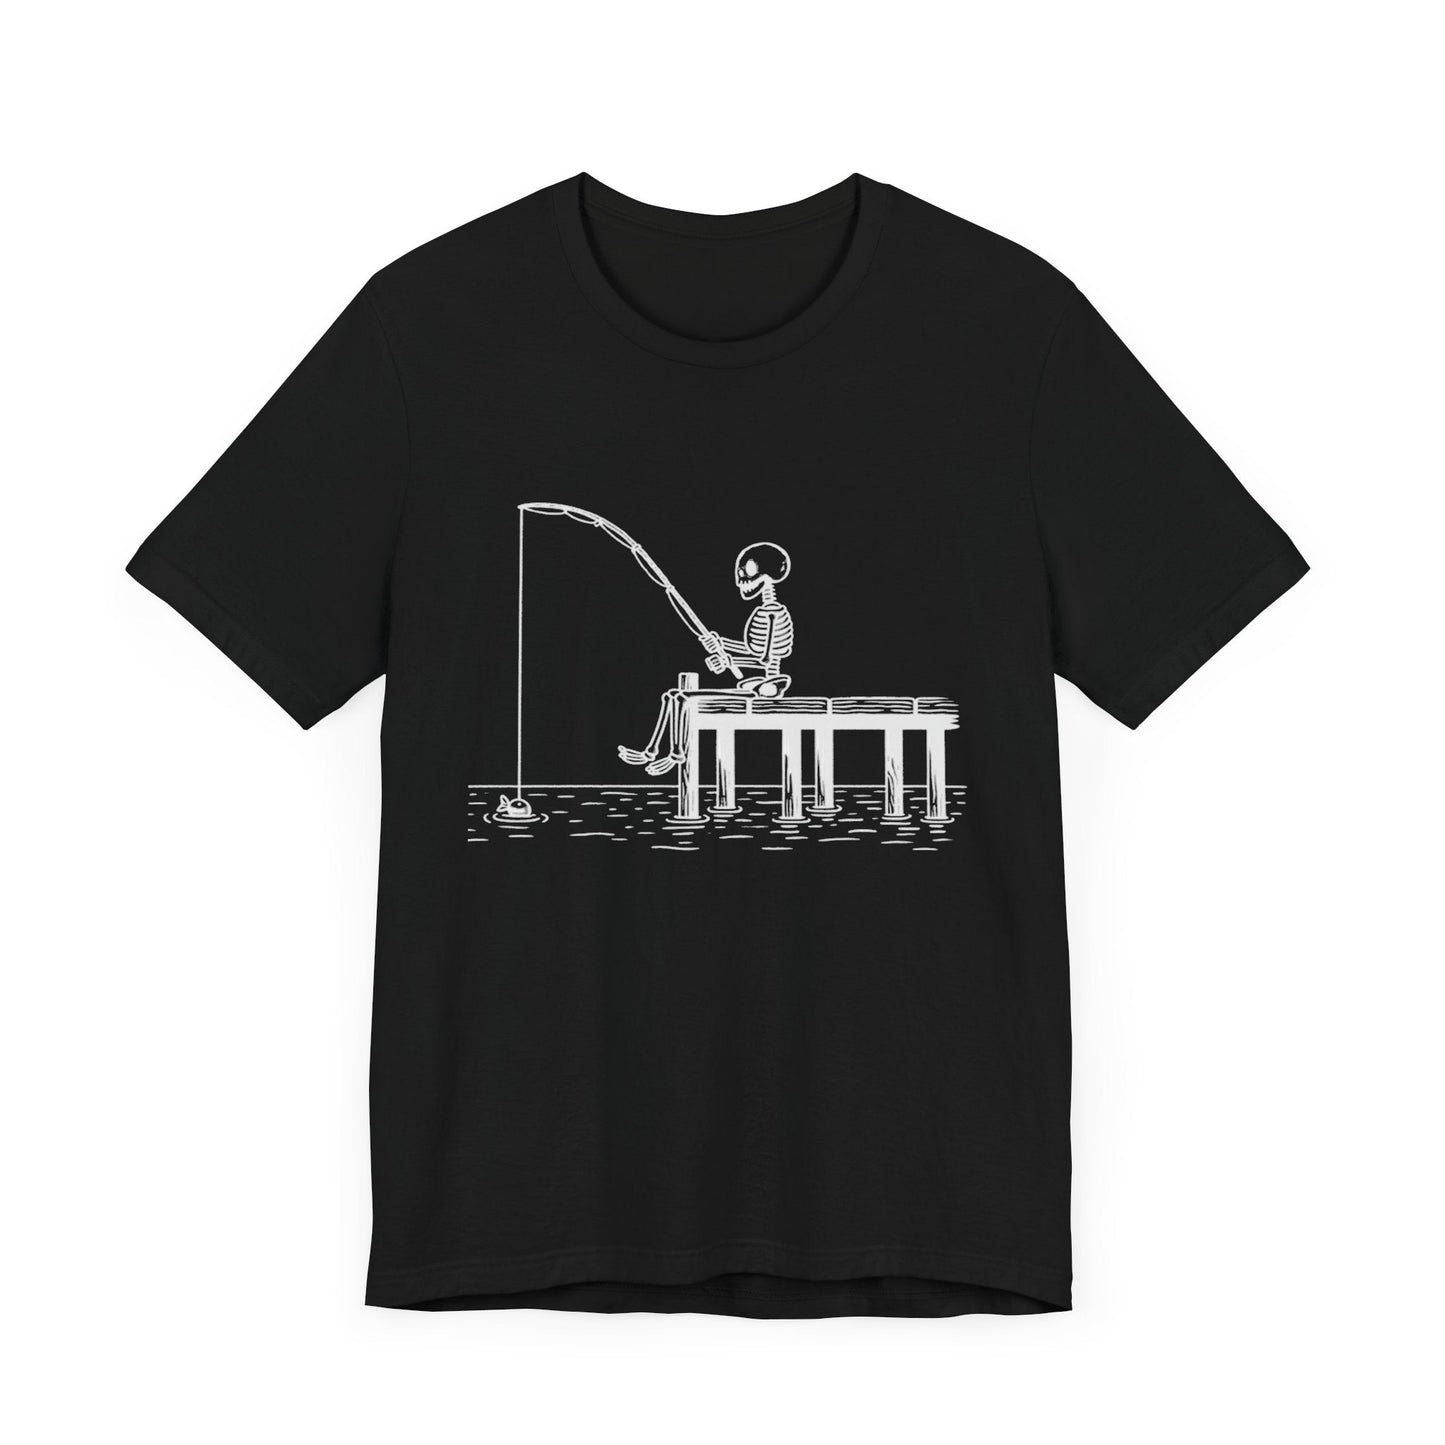 Skeleton Fishing Short Sleeve Tee ShirtT - ShirtVTZdesignsBlackXSclothingCottonCrew neck